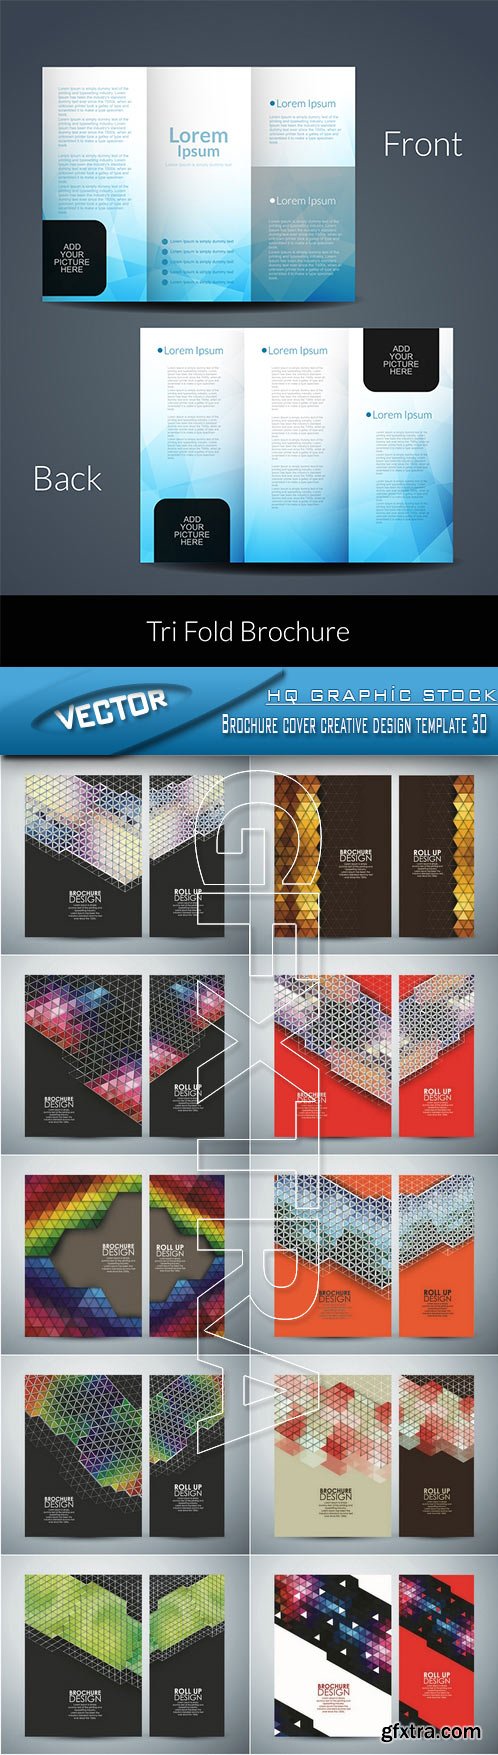 Stock Vector - Brochure cover creative design template 30